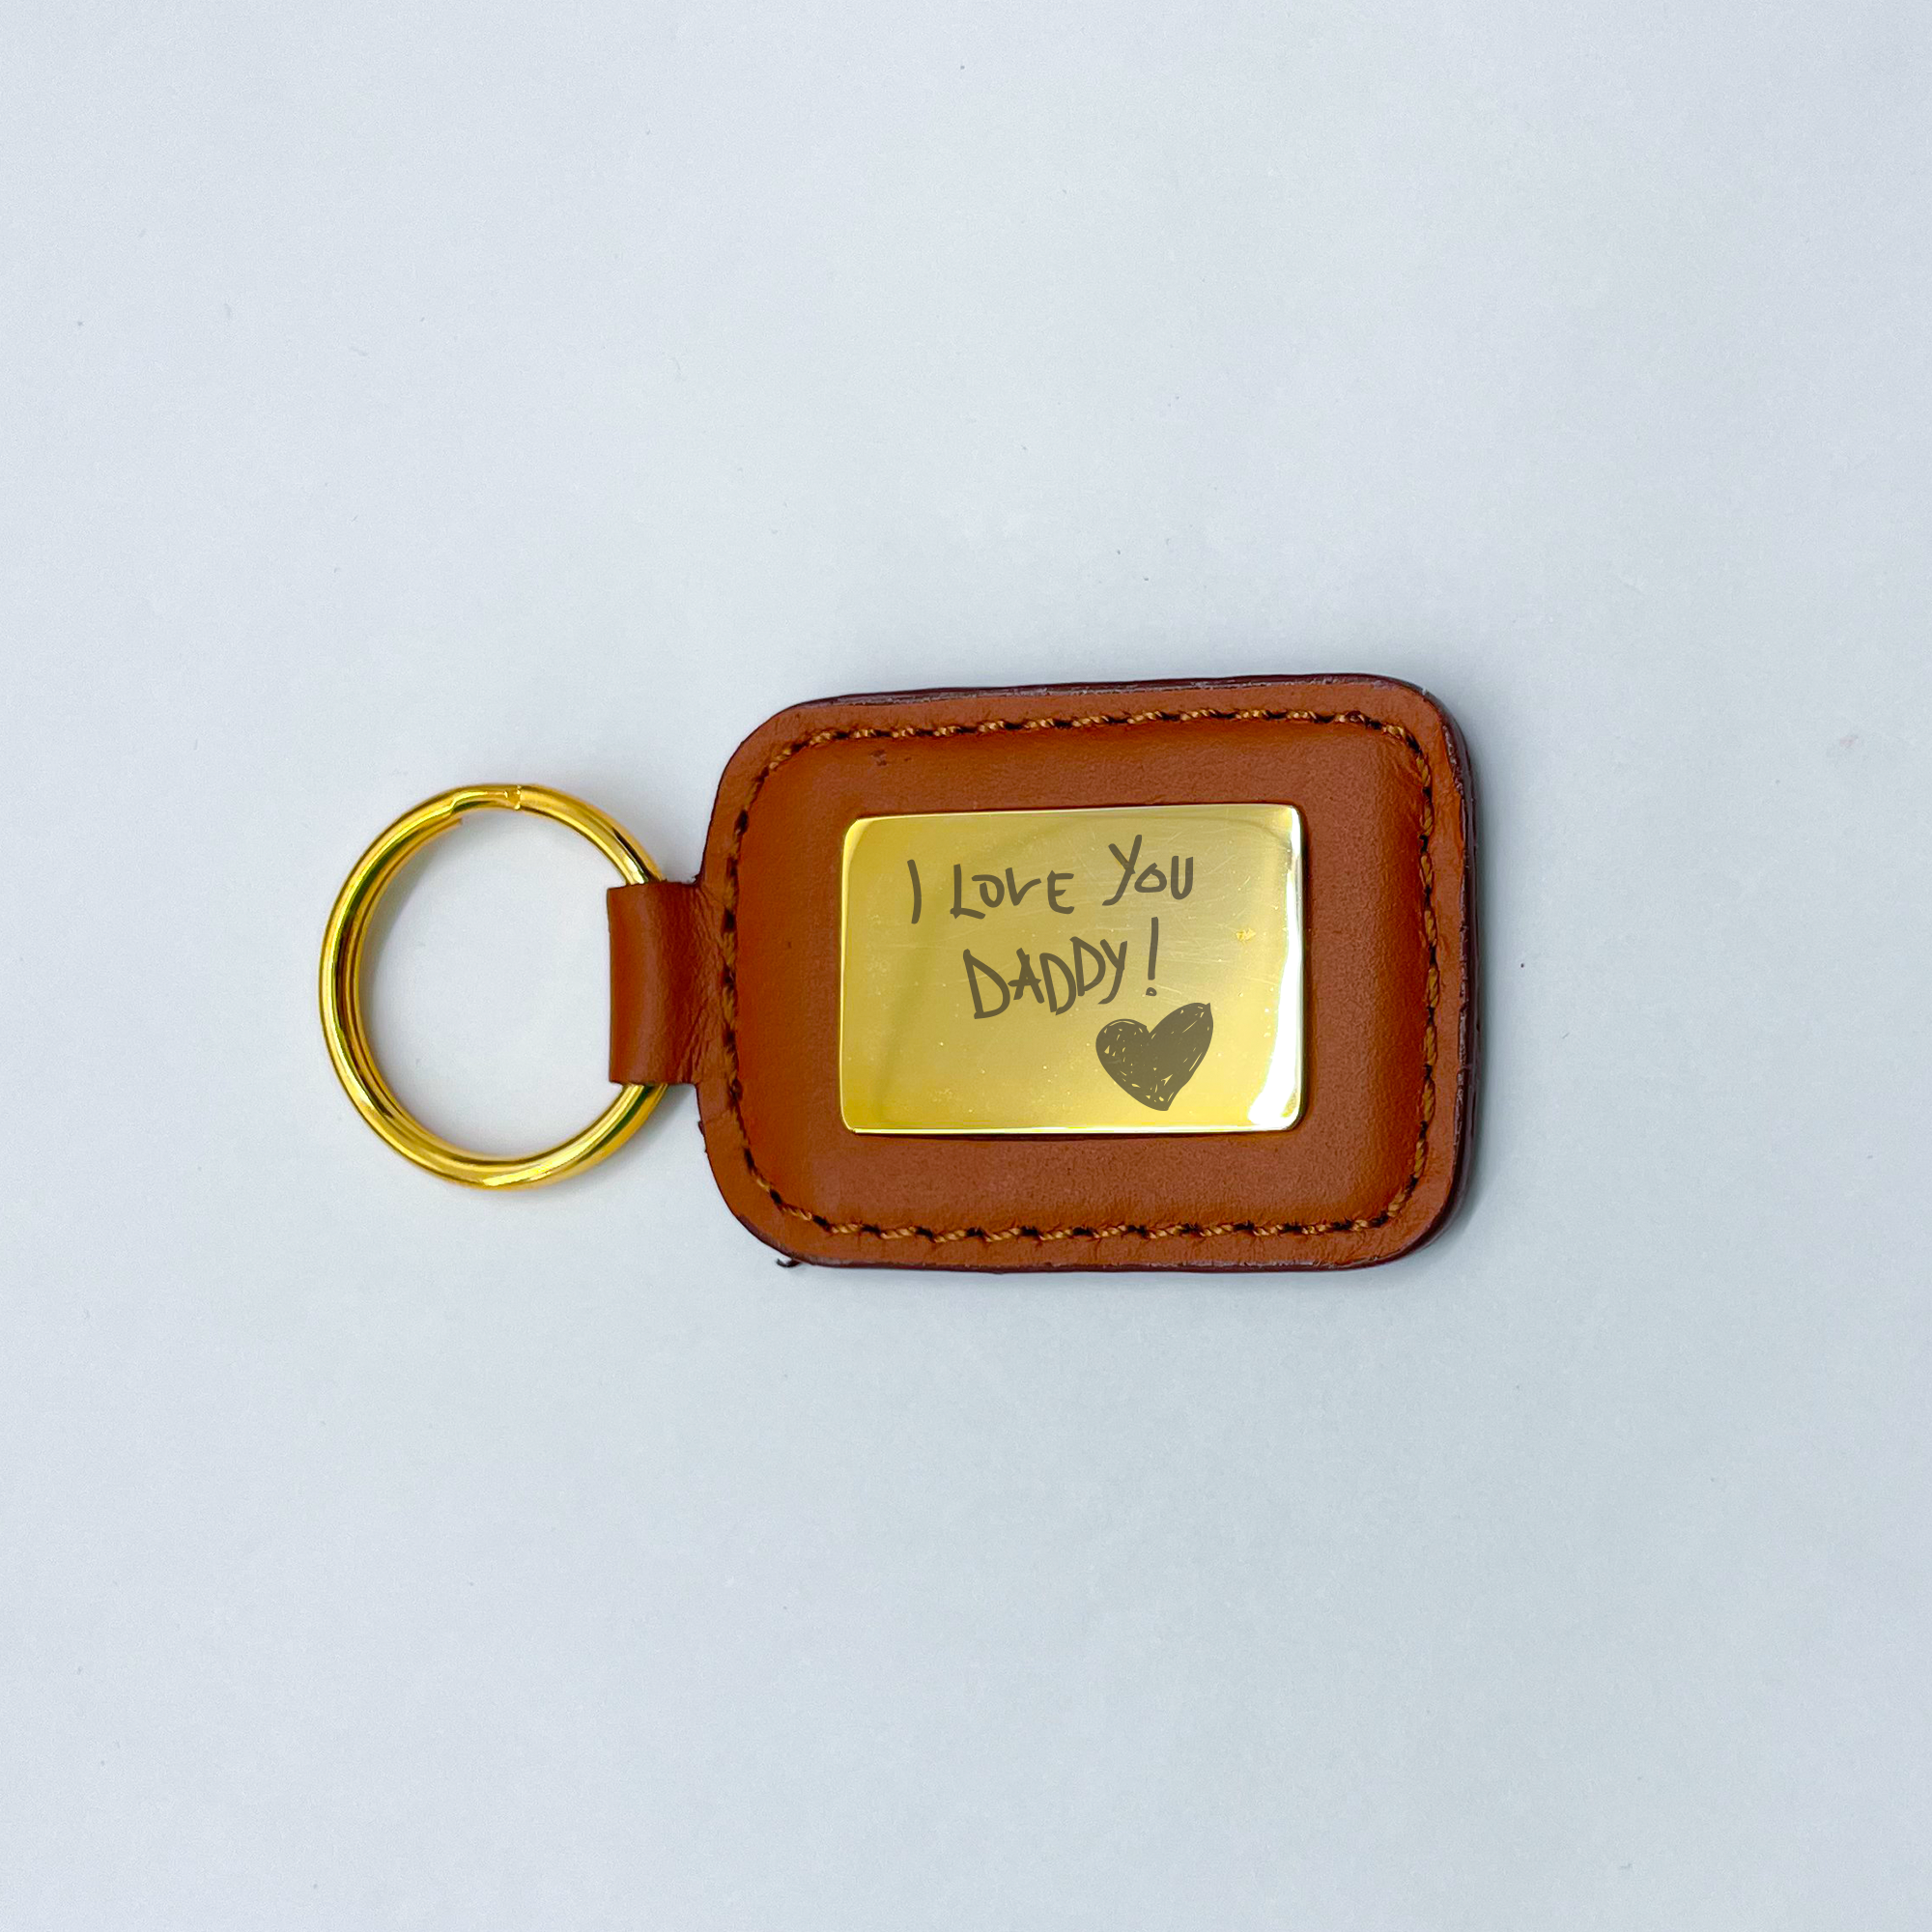 P U Leather Keychain BR 401